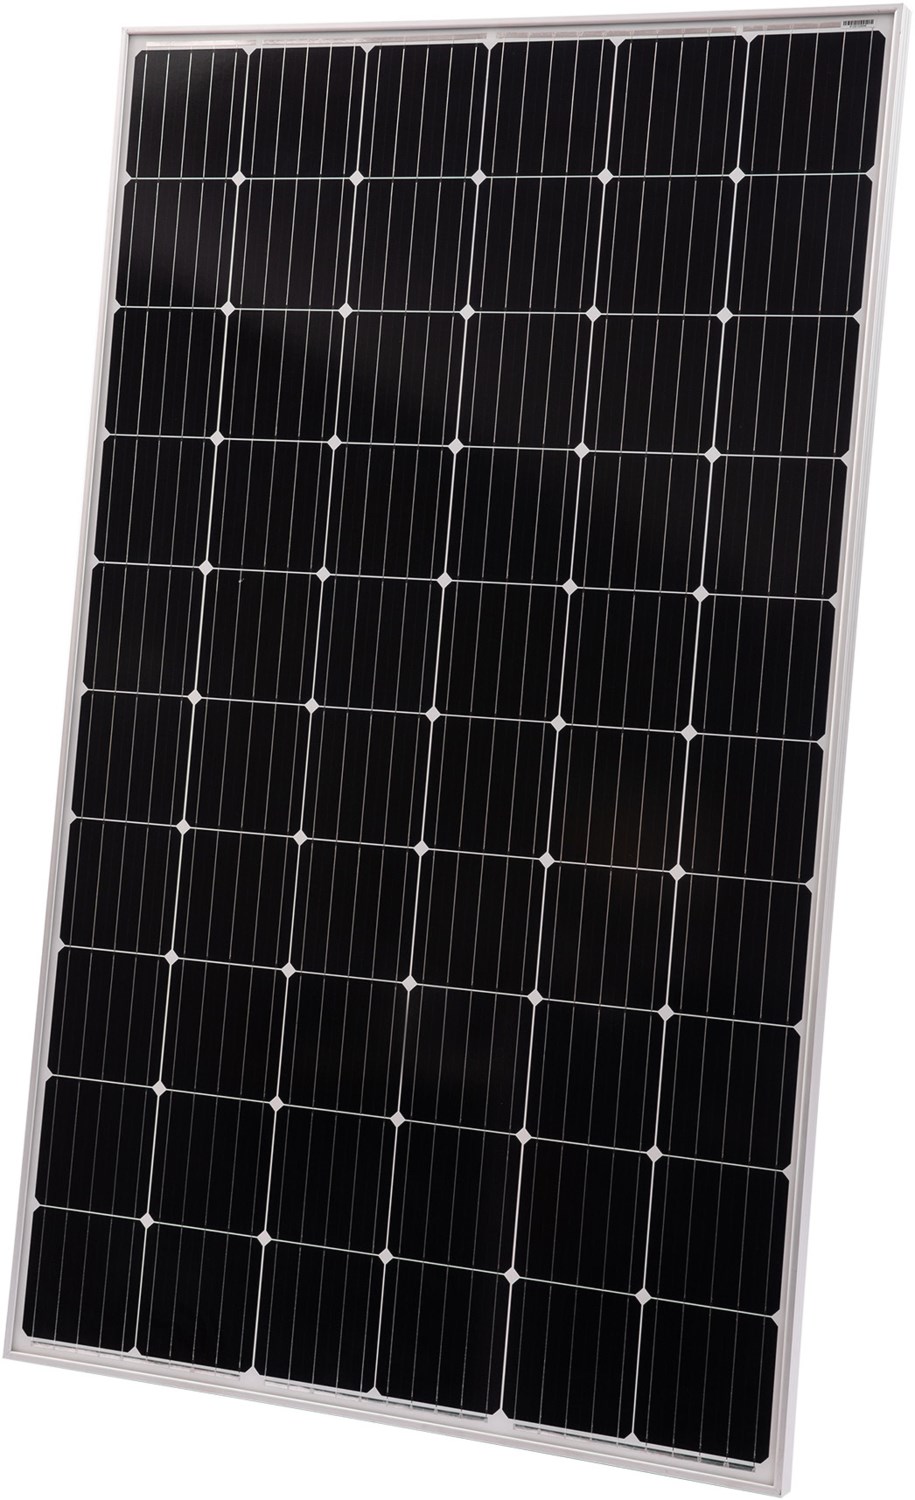 Technaxx Tx-212 Solarmodul 300 W Monokristalline Silizium